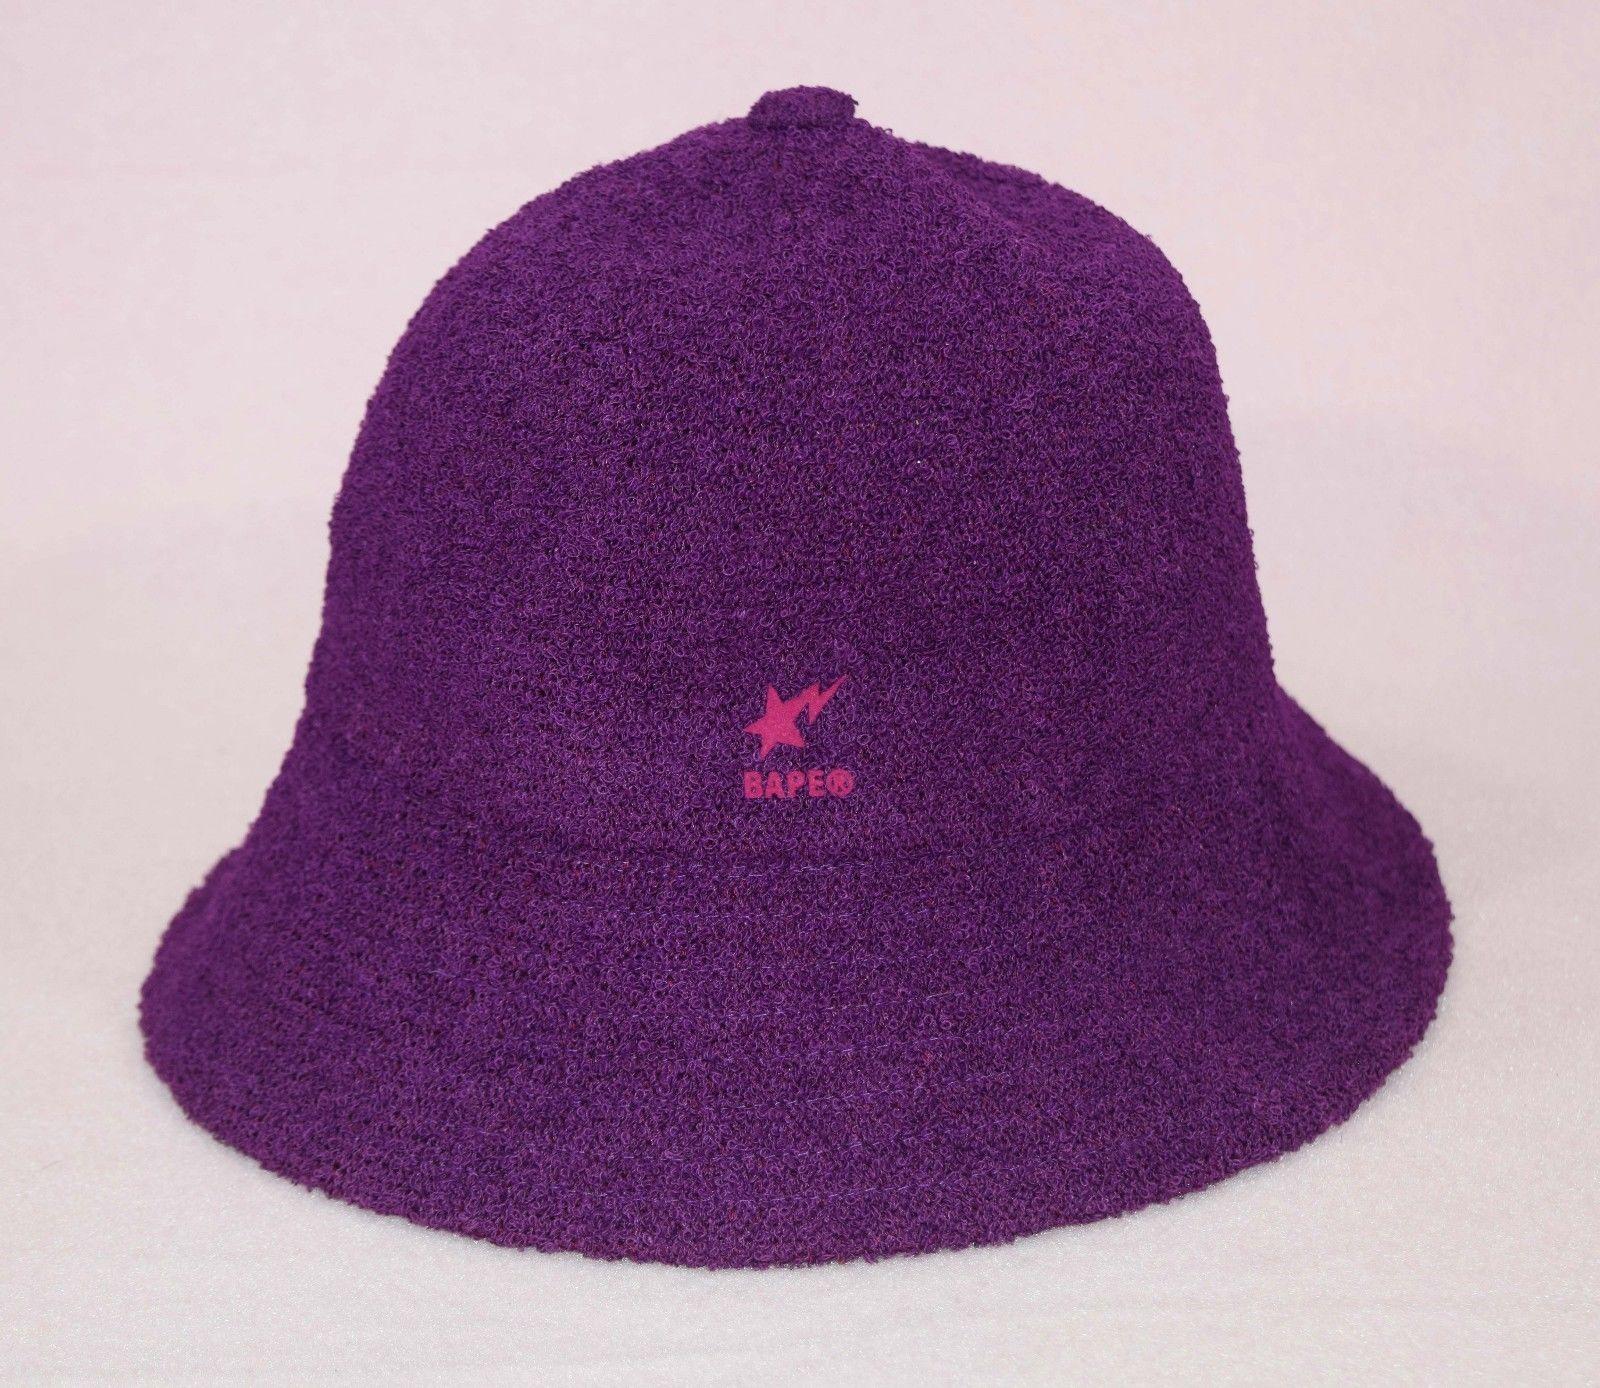 Bapesta Logo - OG Bape Bapesta Logo Purple Kangol Style Bucket Hat Size L nigo